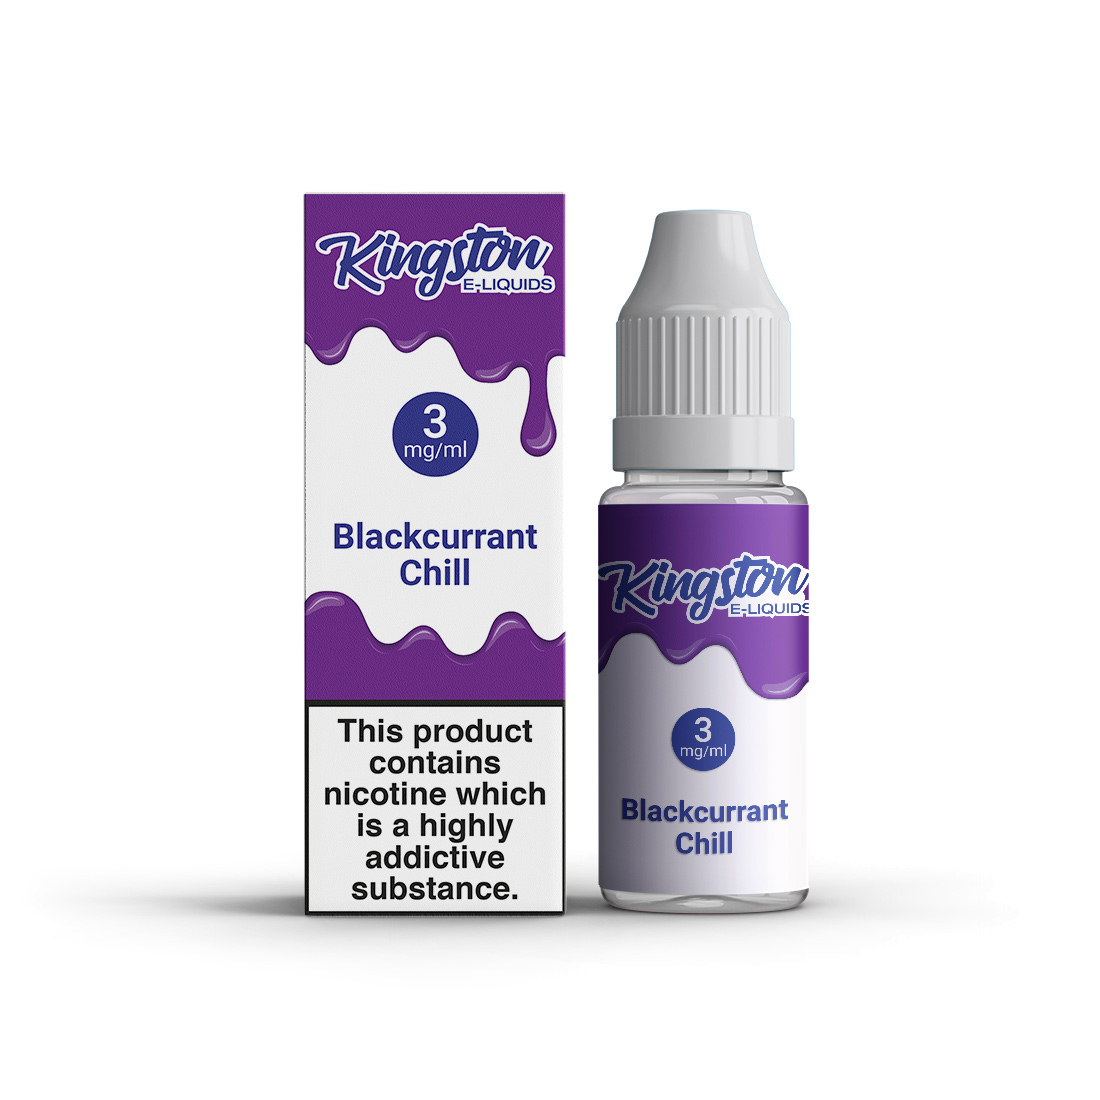 Kingston 50/50 10ml - Pack of 10 - Blackcurrant Chill